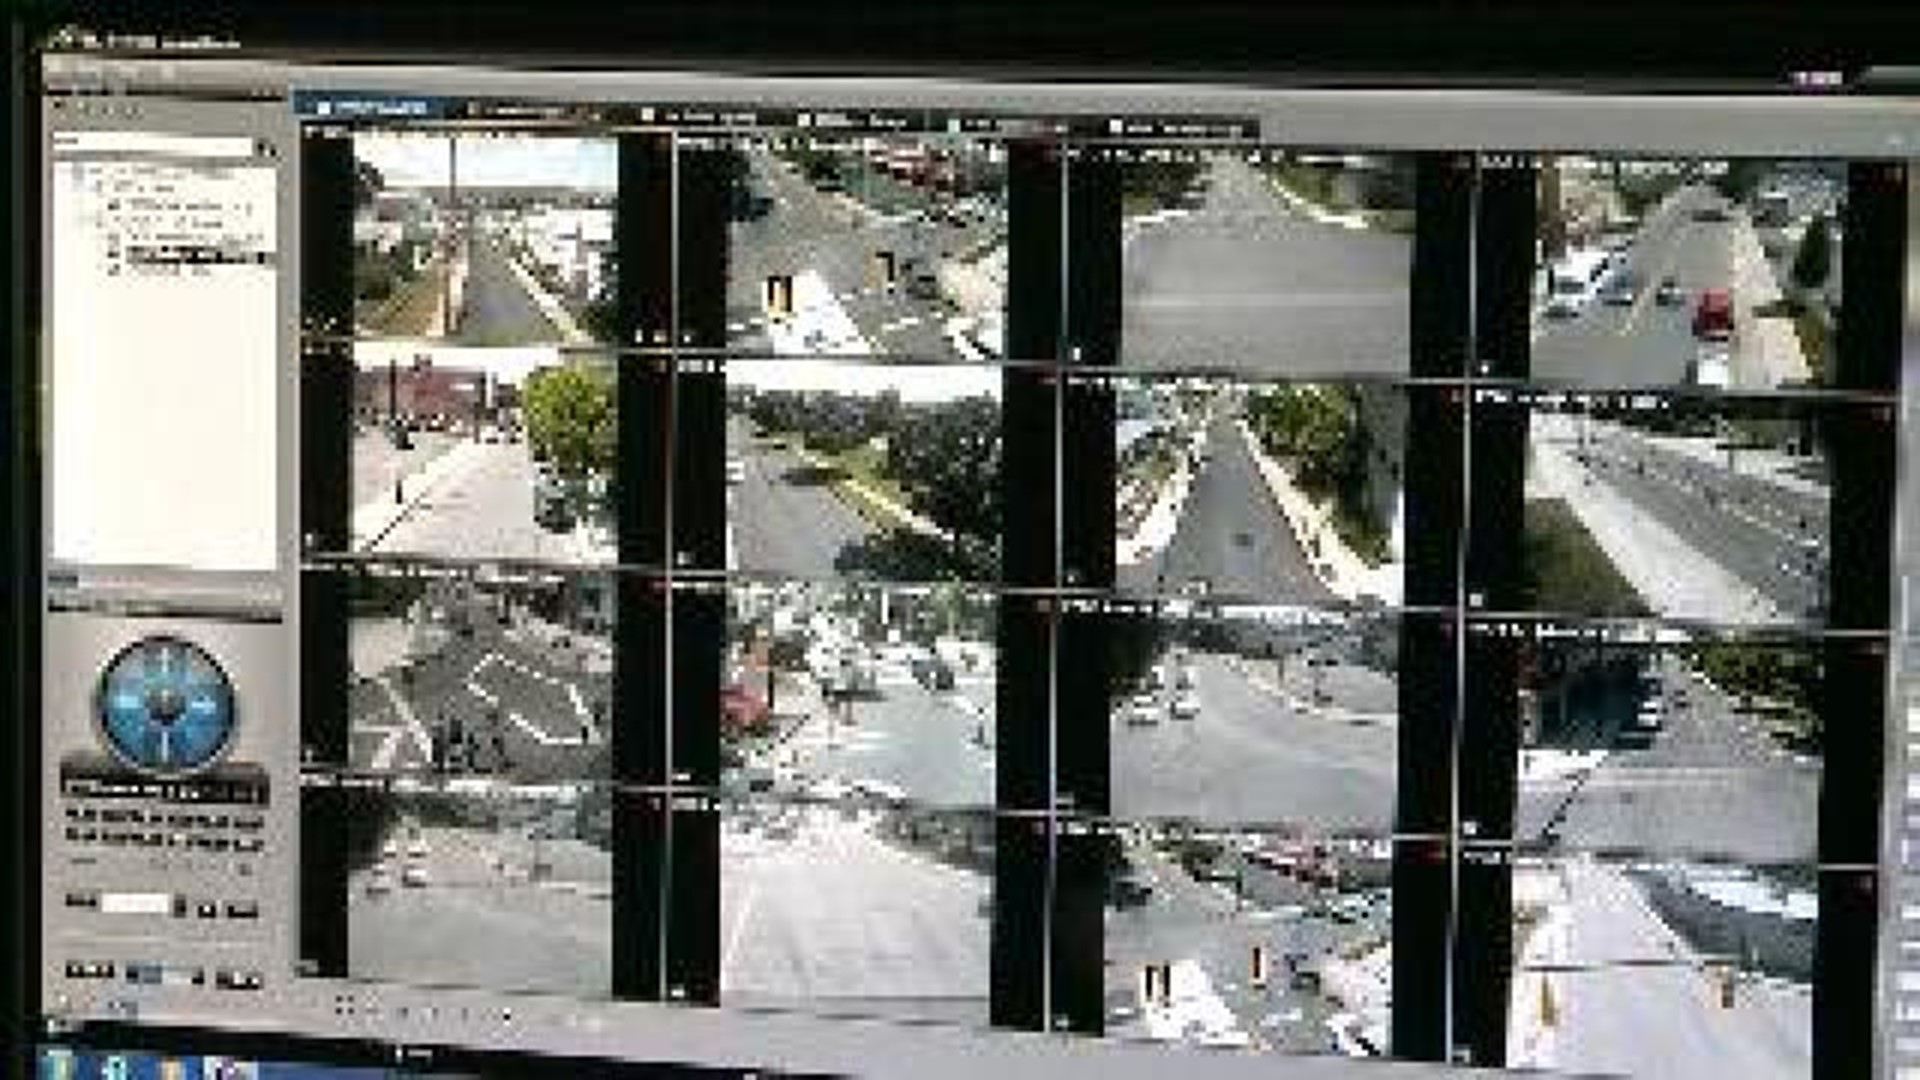 Hawkeye To Consider Dissolving City Surveillance Camera Group